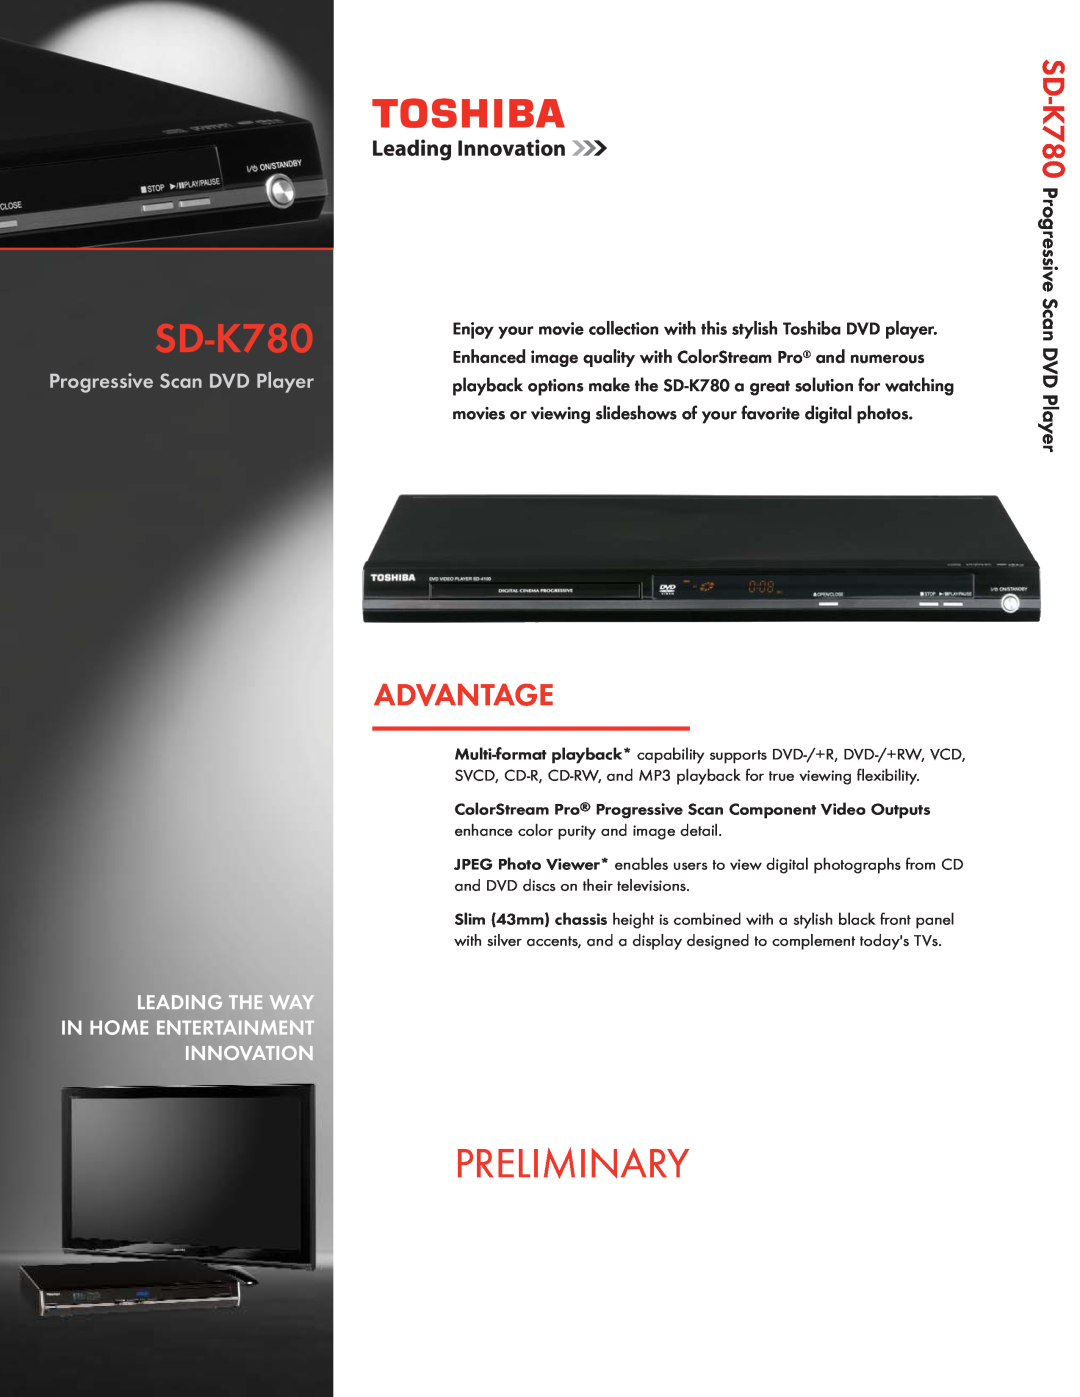 Toshiba manual SD-K780 Progressive Scan DVD Player, Preliminary, Advantage 